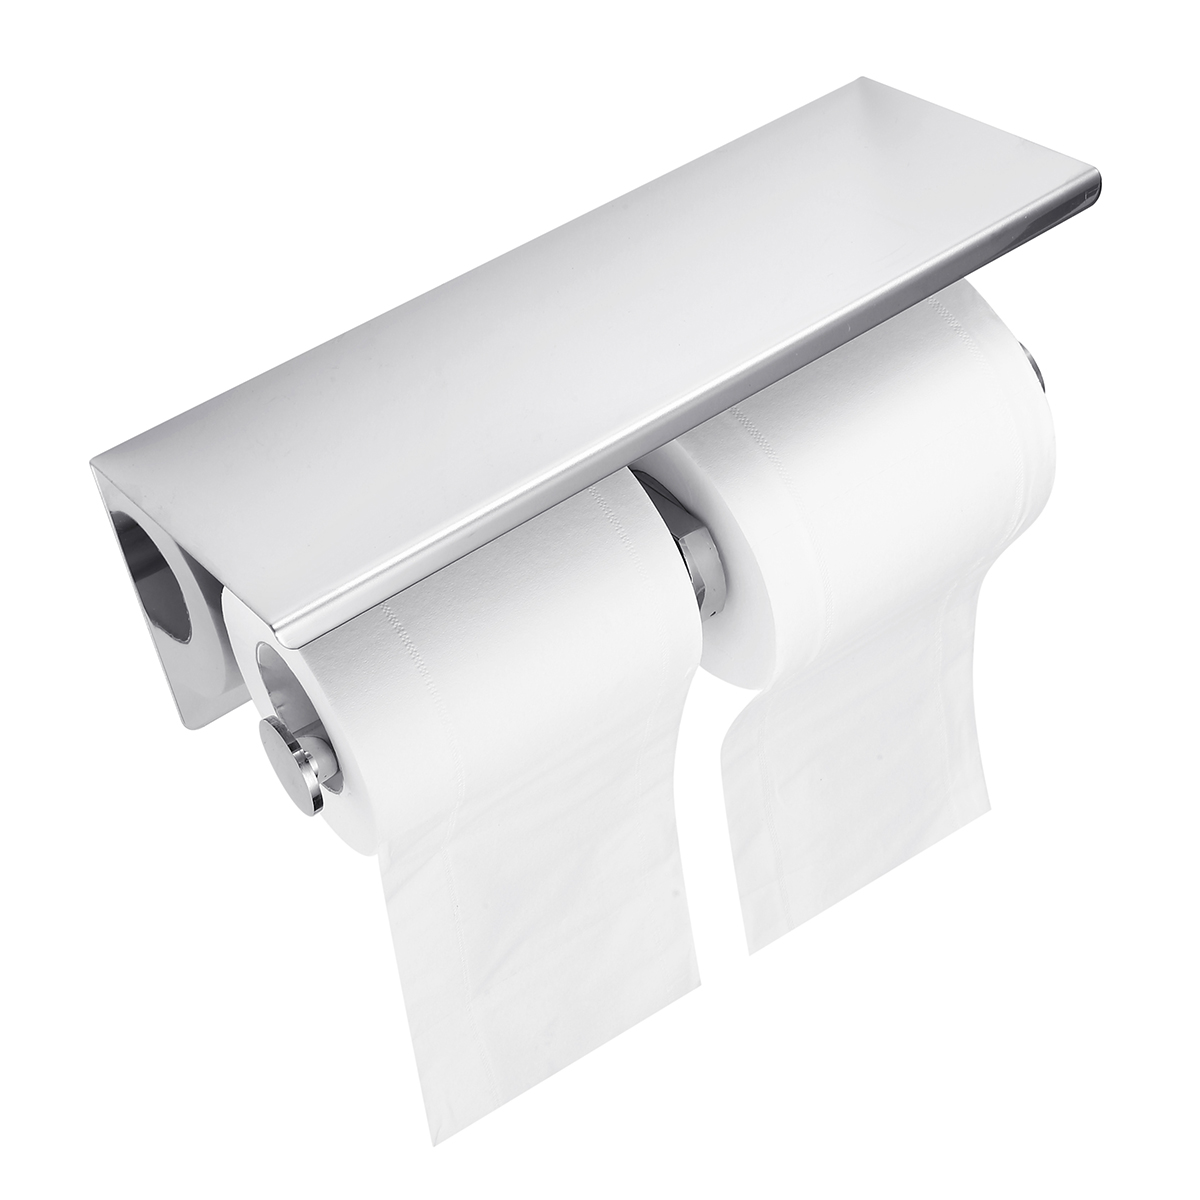 Stainless-Steel-Toilet-Paper-Double-Roll-Holder-Bathroom-Wall-Mount-Paper-Shelf-Holder-Home-1523904-2